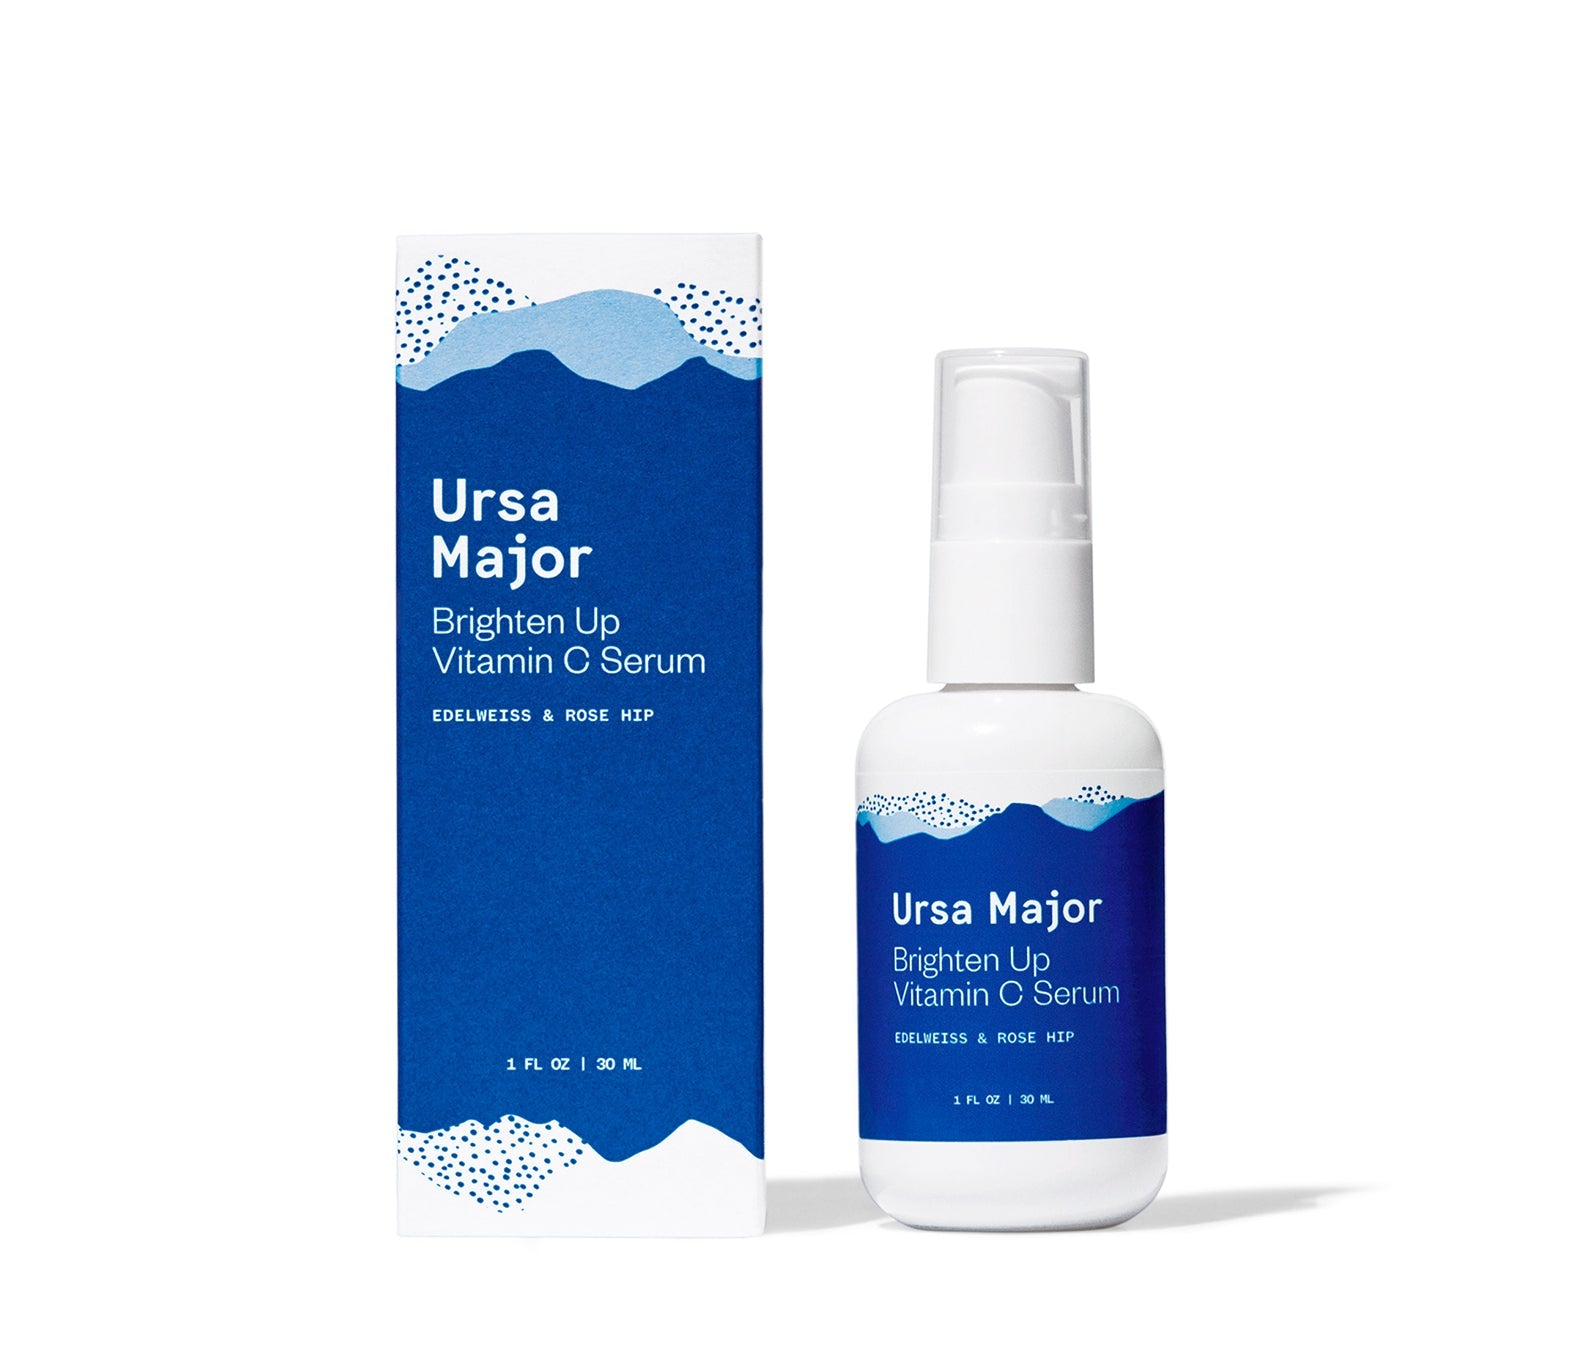 Packaging for Brighten Up Vitamin C Serum by Ursa Major Skincare